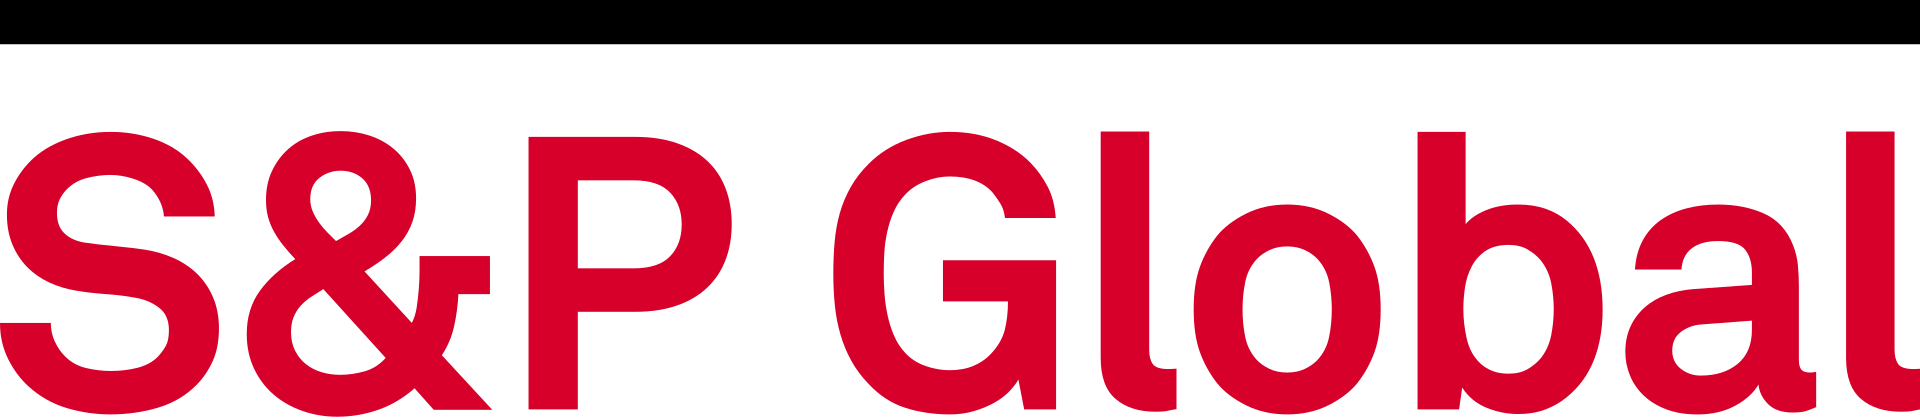 S&P Global Brand Logo